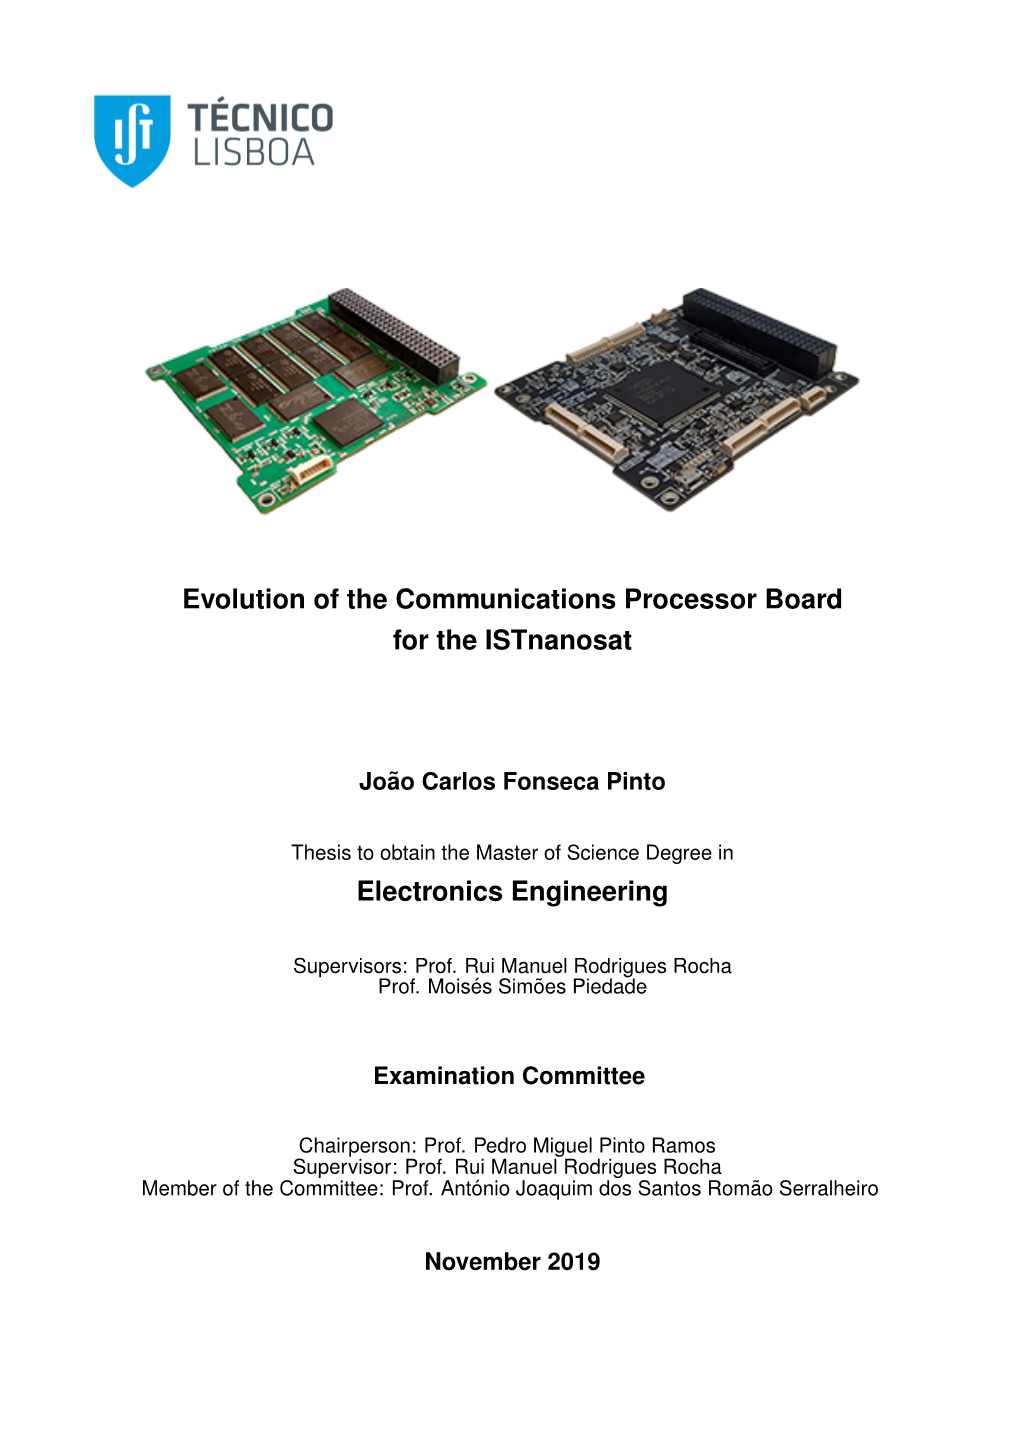 Evolution of the Communications Processor Board for the Istnanosat